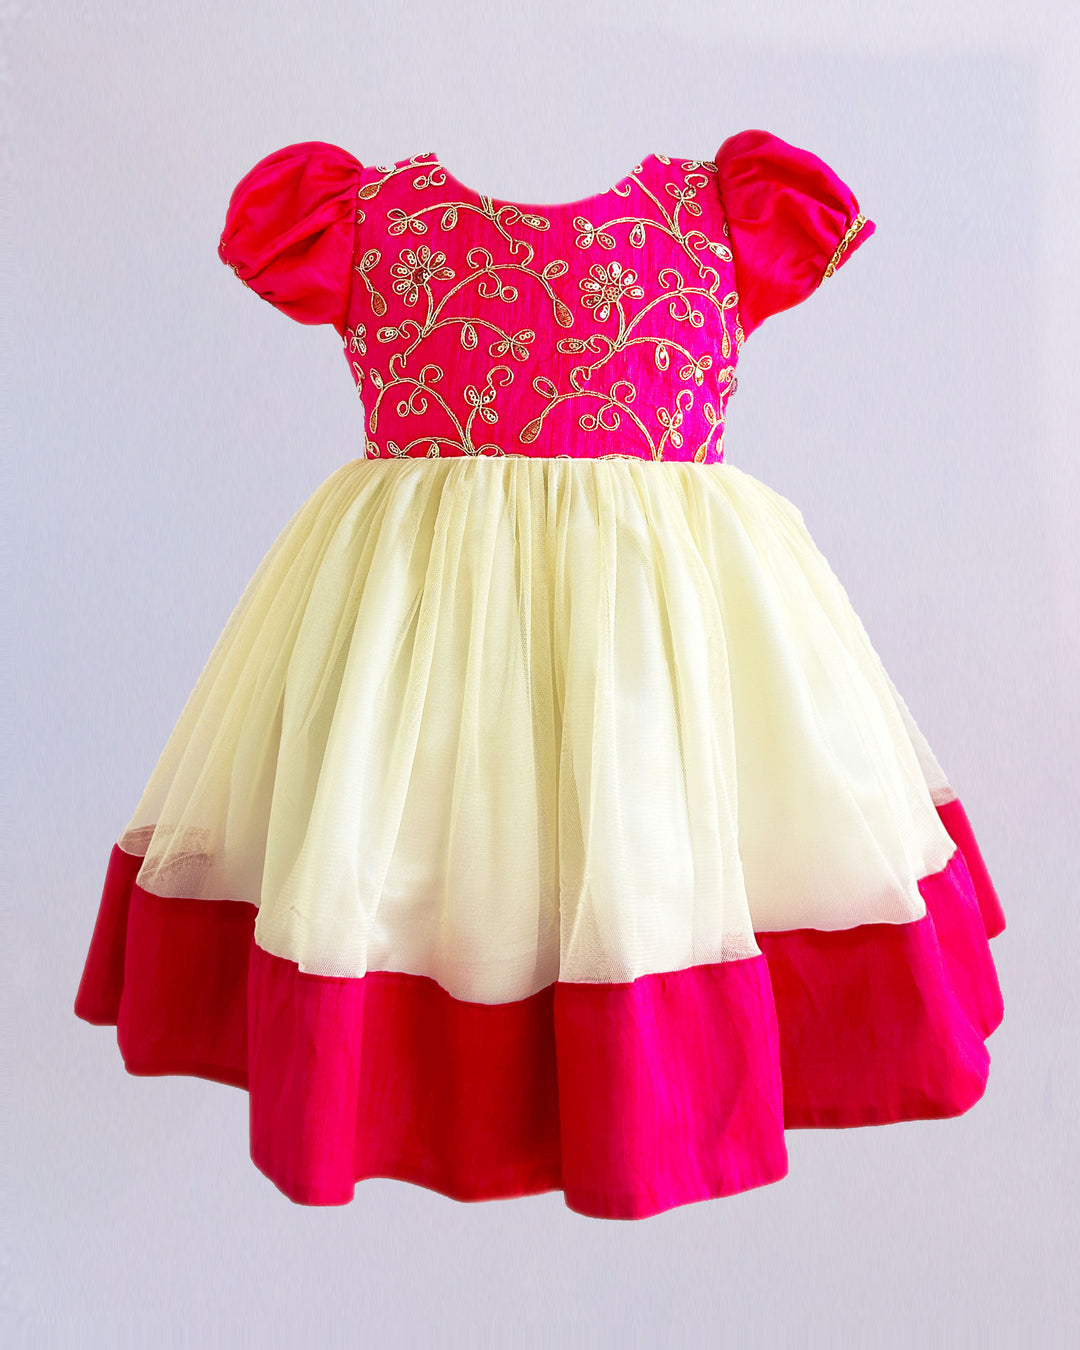 baby frocks kids dresses  kids dresses online stanwells kids frocks for 1-2 years birthday dresses pink theme frocks 